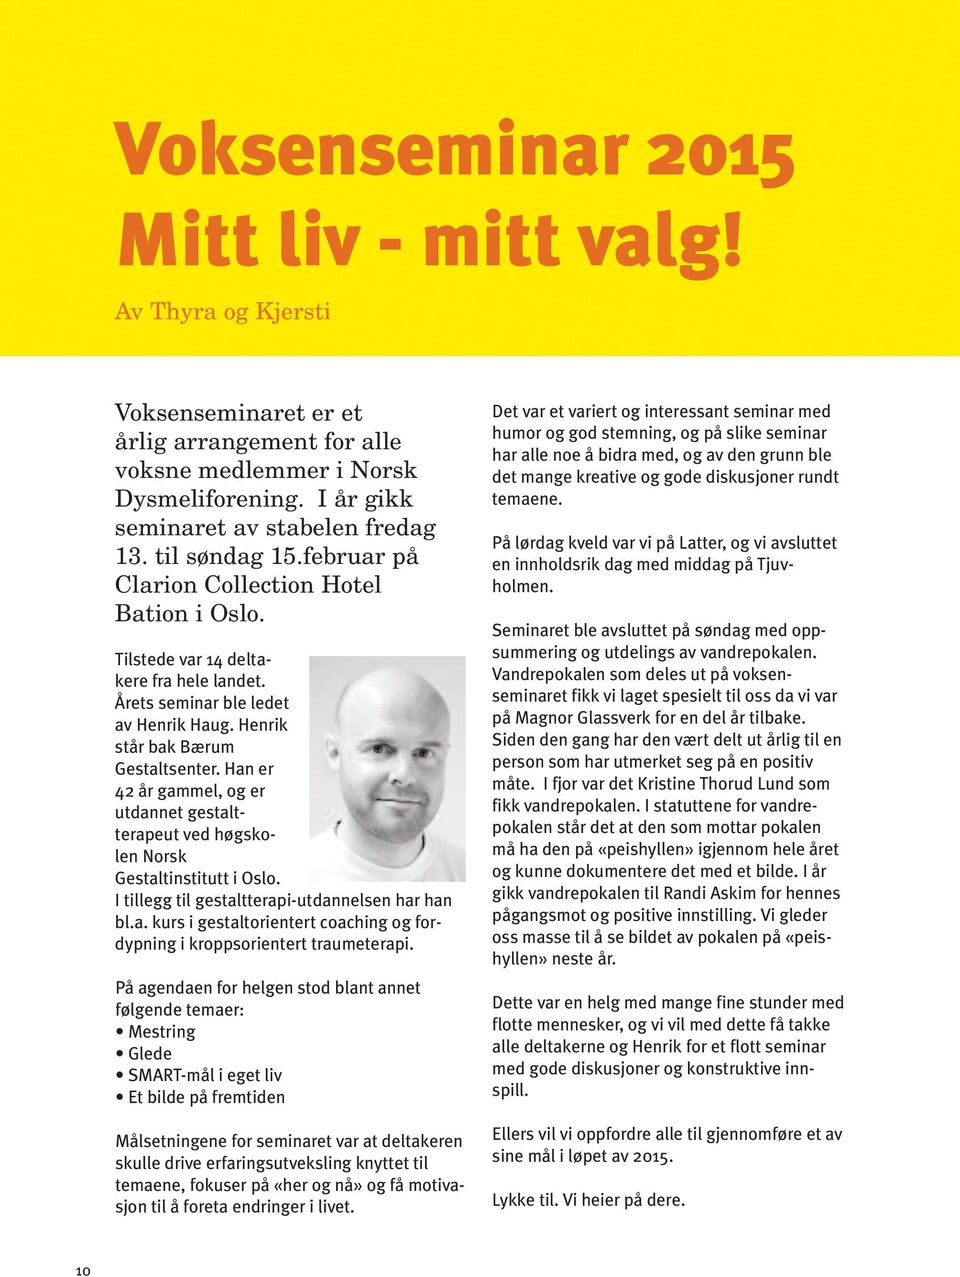 Han er 42 år gammel, og er utdannet gestaltterapeut ved høgskolen Norsk Gestaltinstitutt i Oslo. I tillegg til gestaltterapi-utdannelsen har han bl.a. kurs i gestaltorientert coaching og fordypning i kroppsorientert traumeterapi.